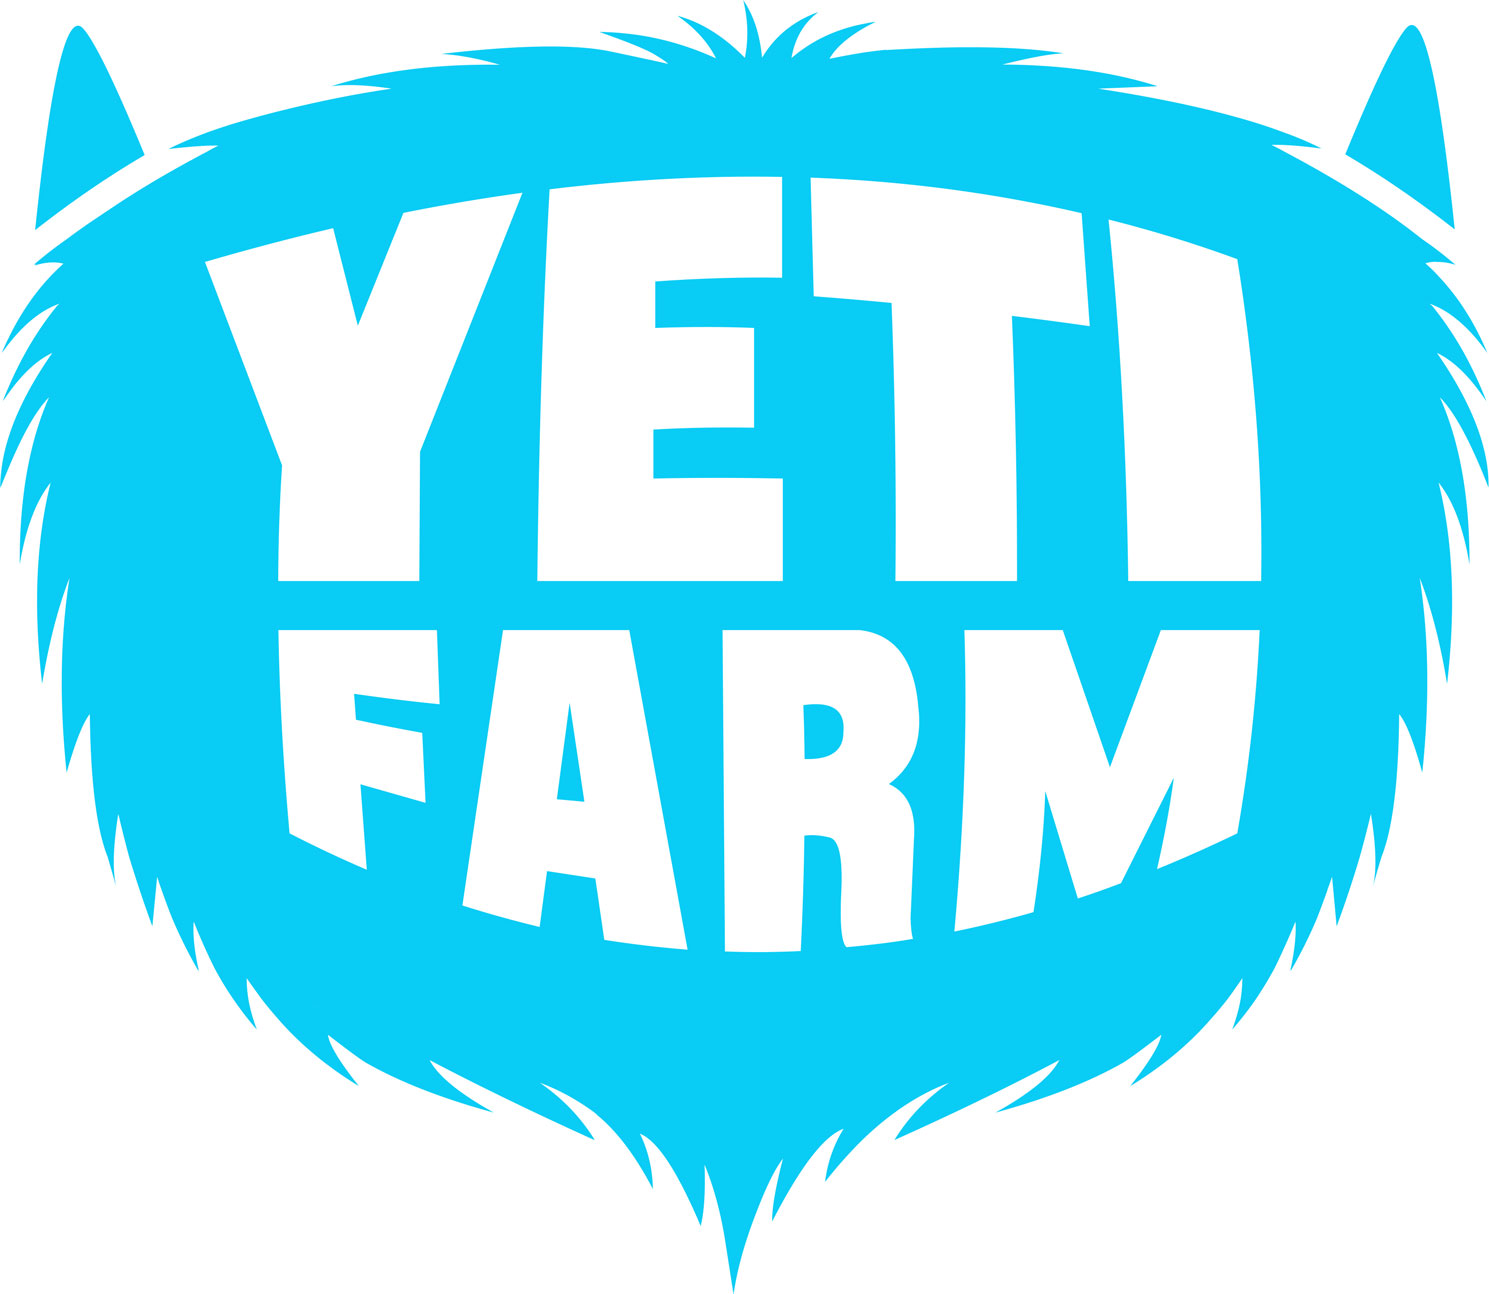 Yeti Farm Creative